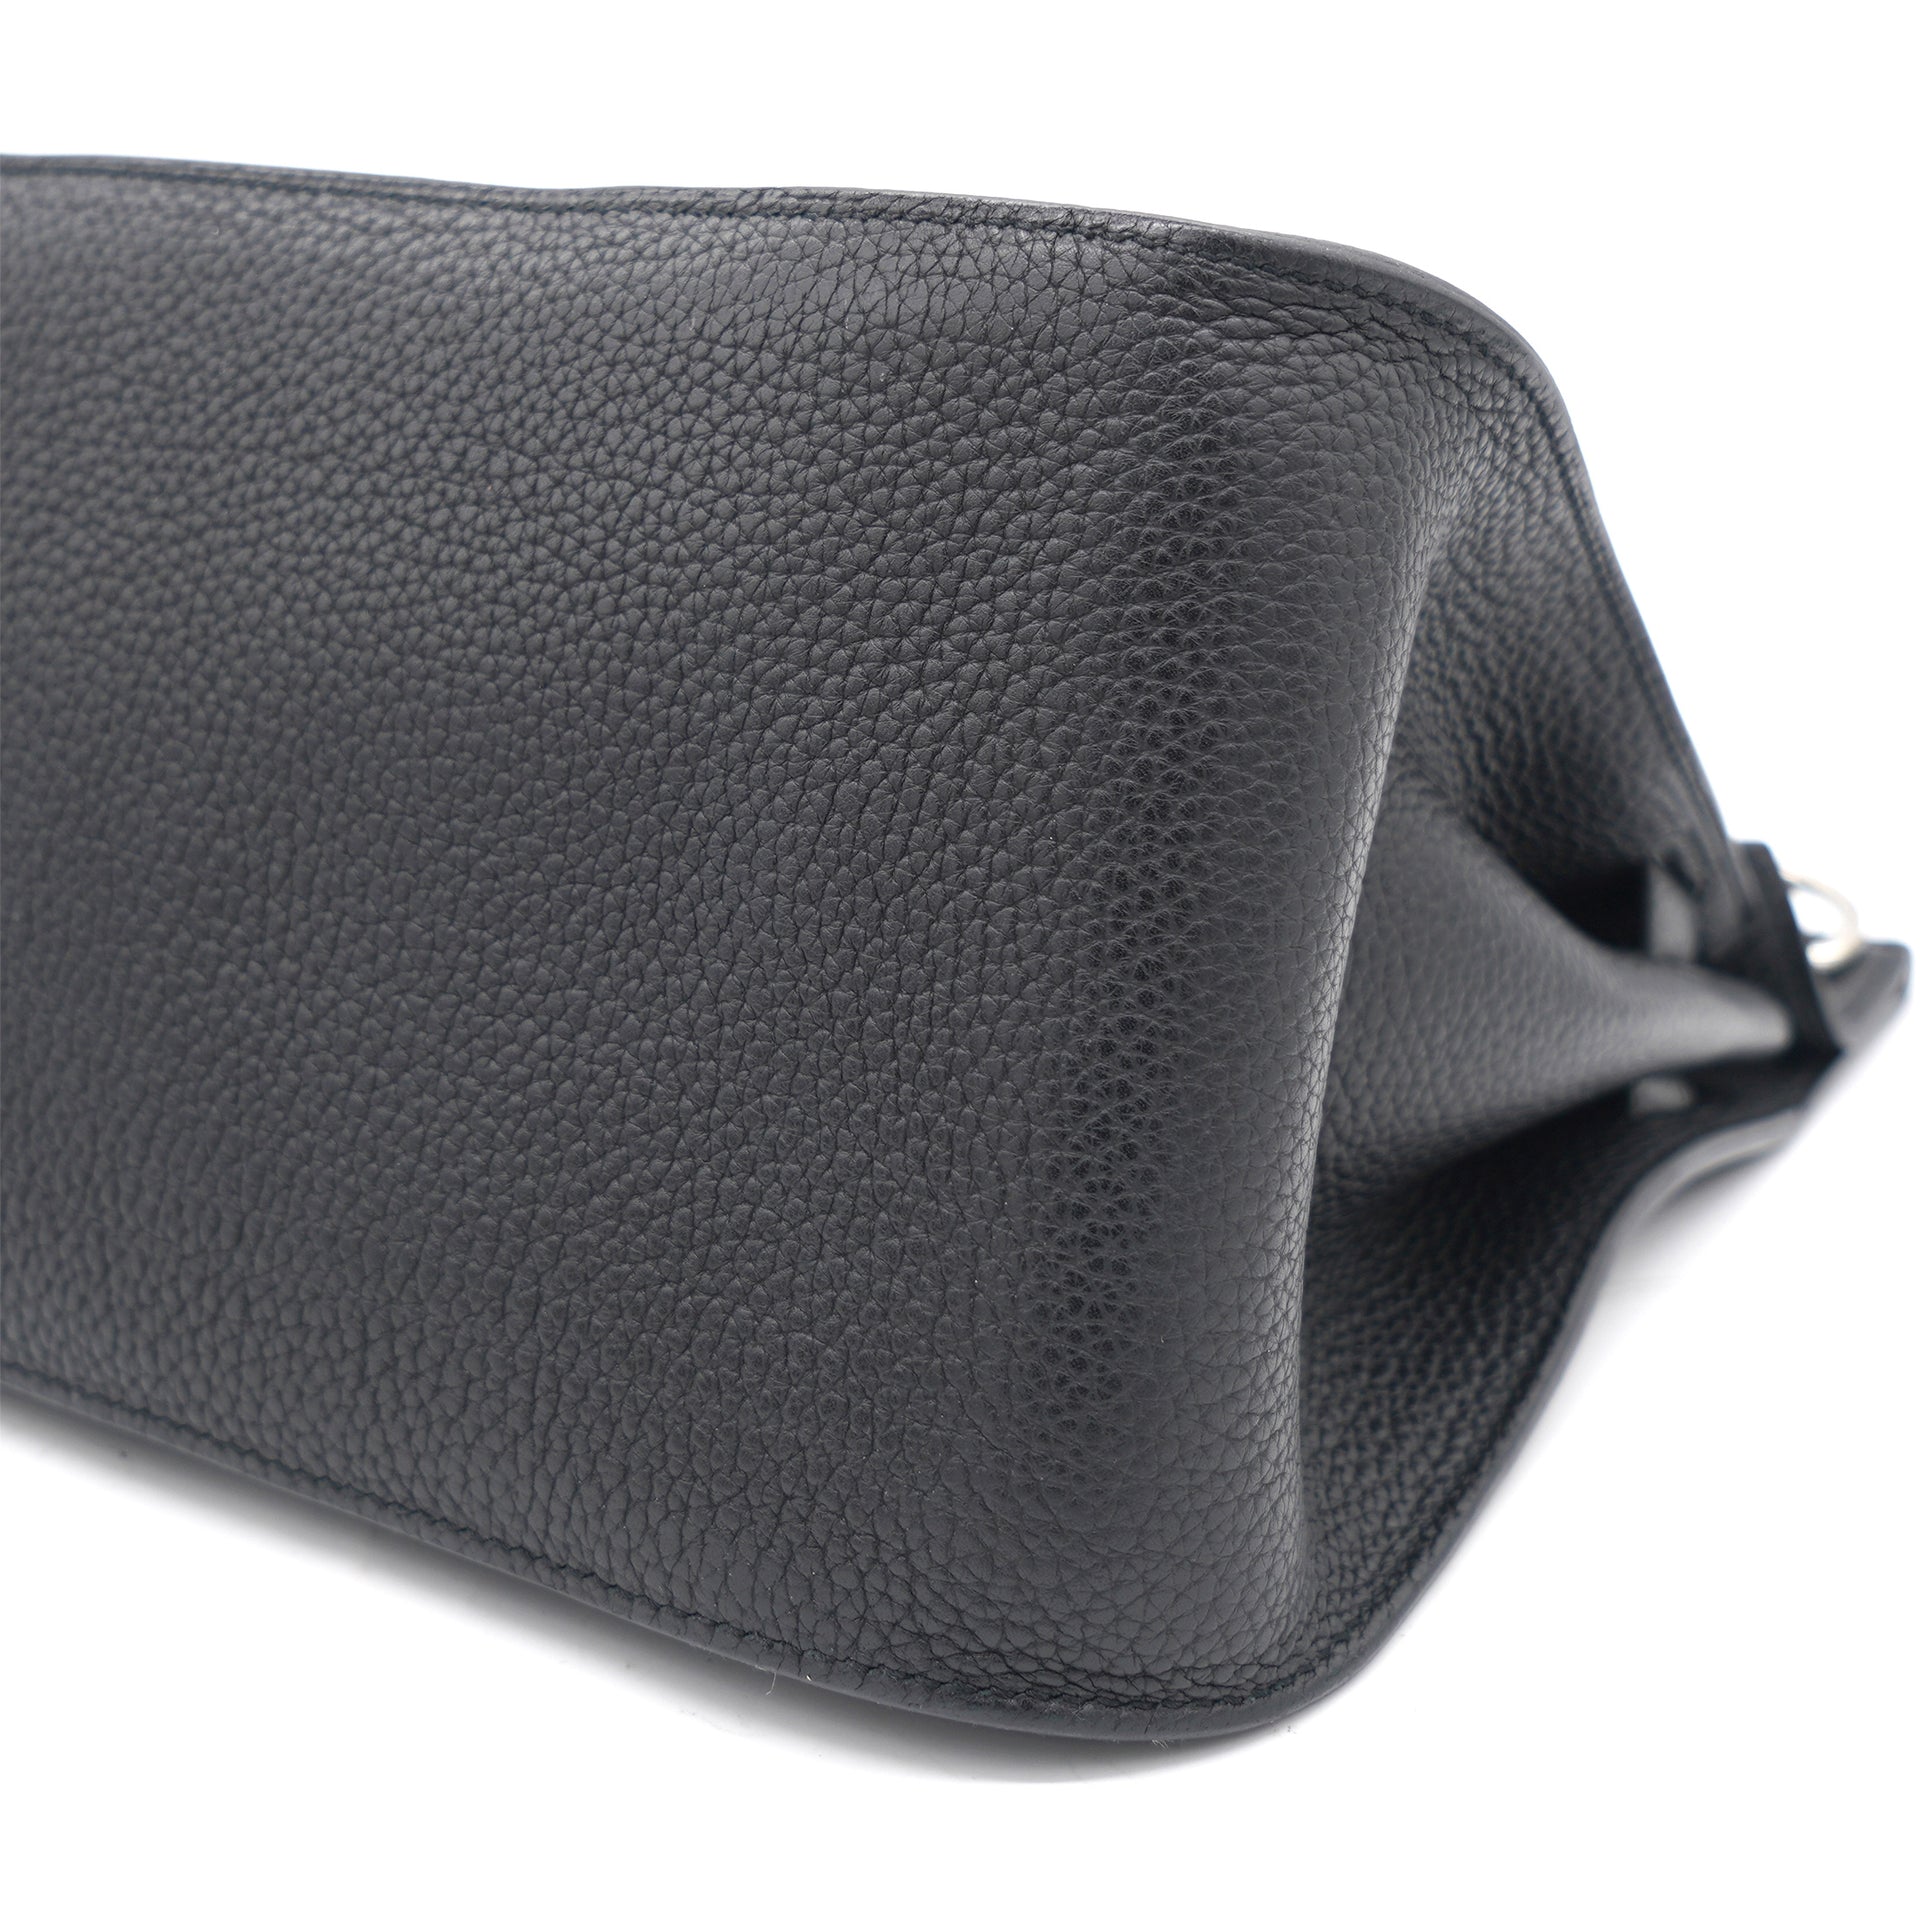 Black Taurillon Clemence Leather Palladium Hardware Jypsiere 34 Bag